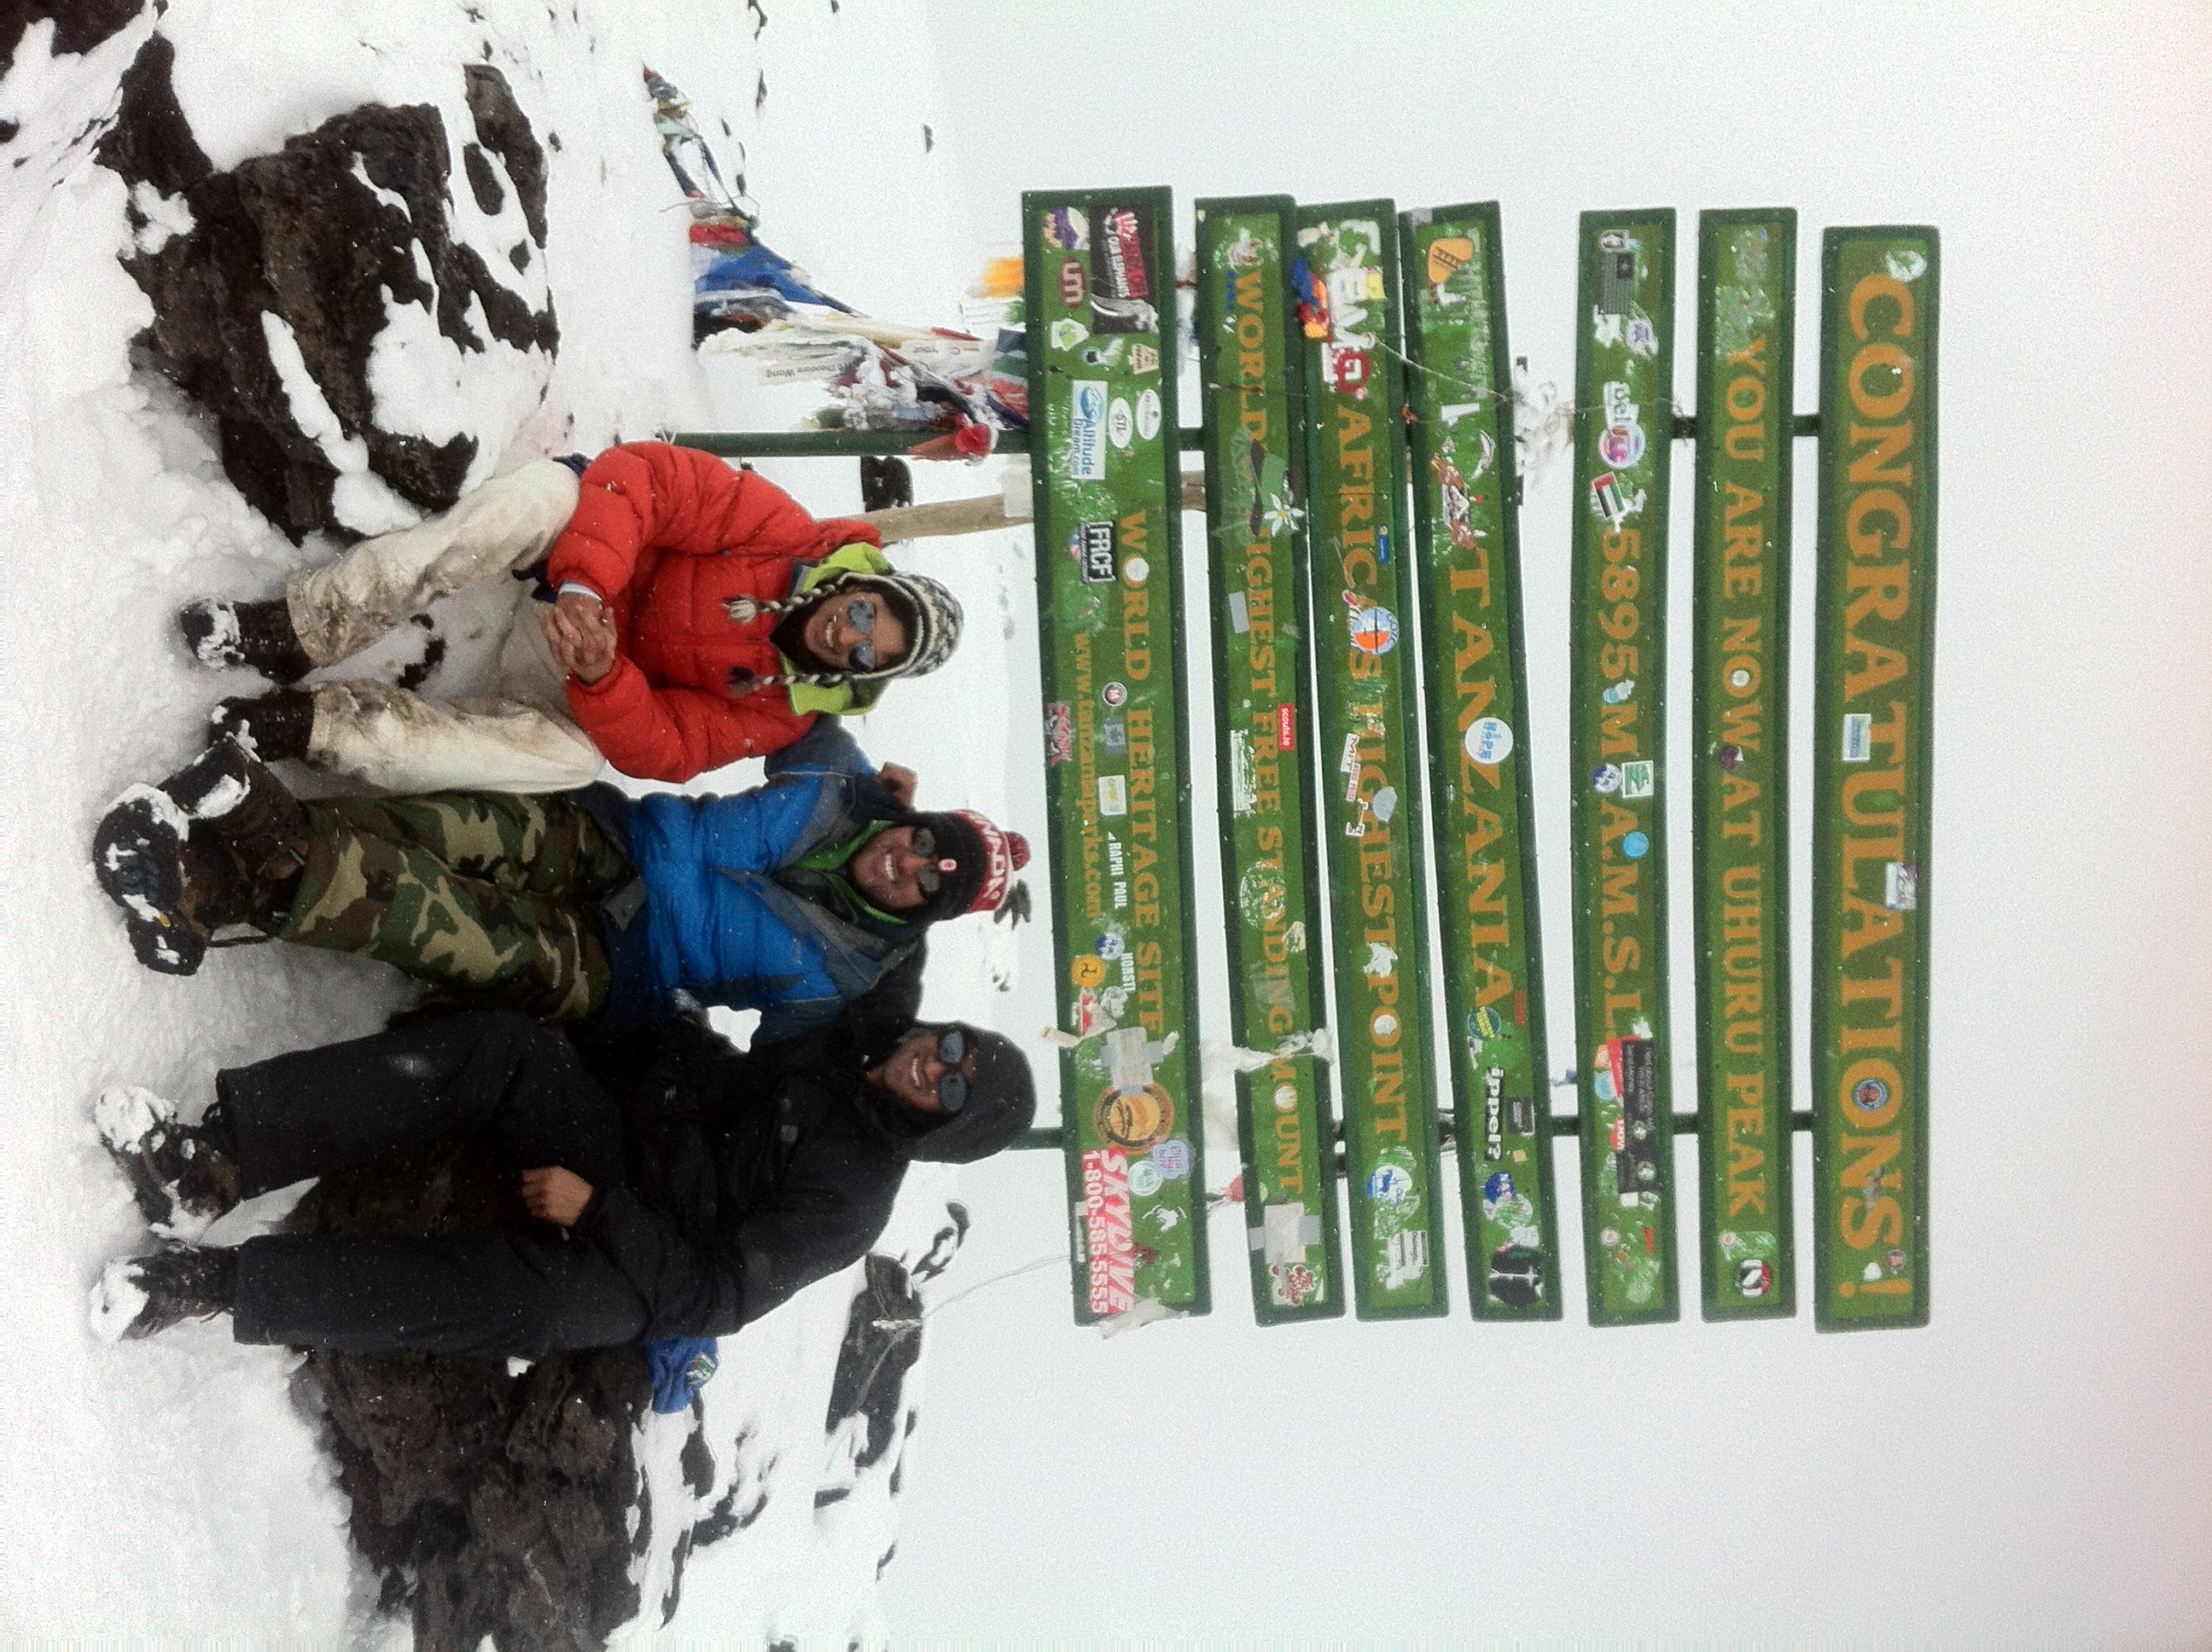 Zamir with friends on mountain